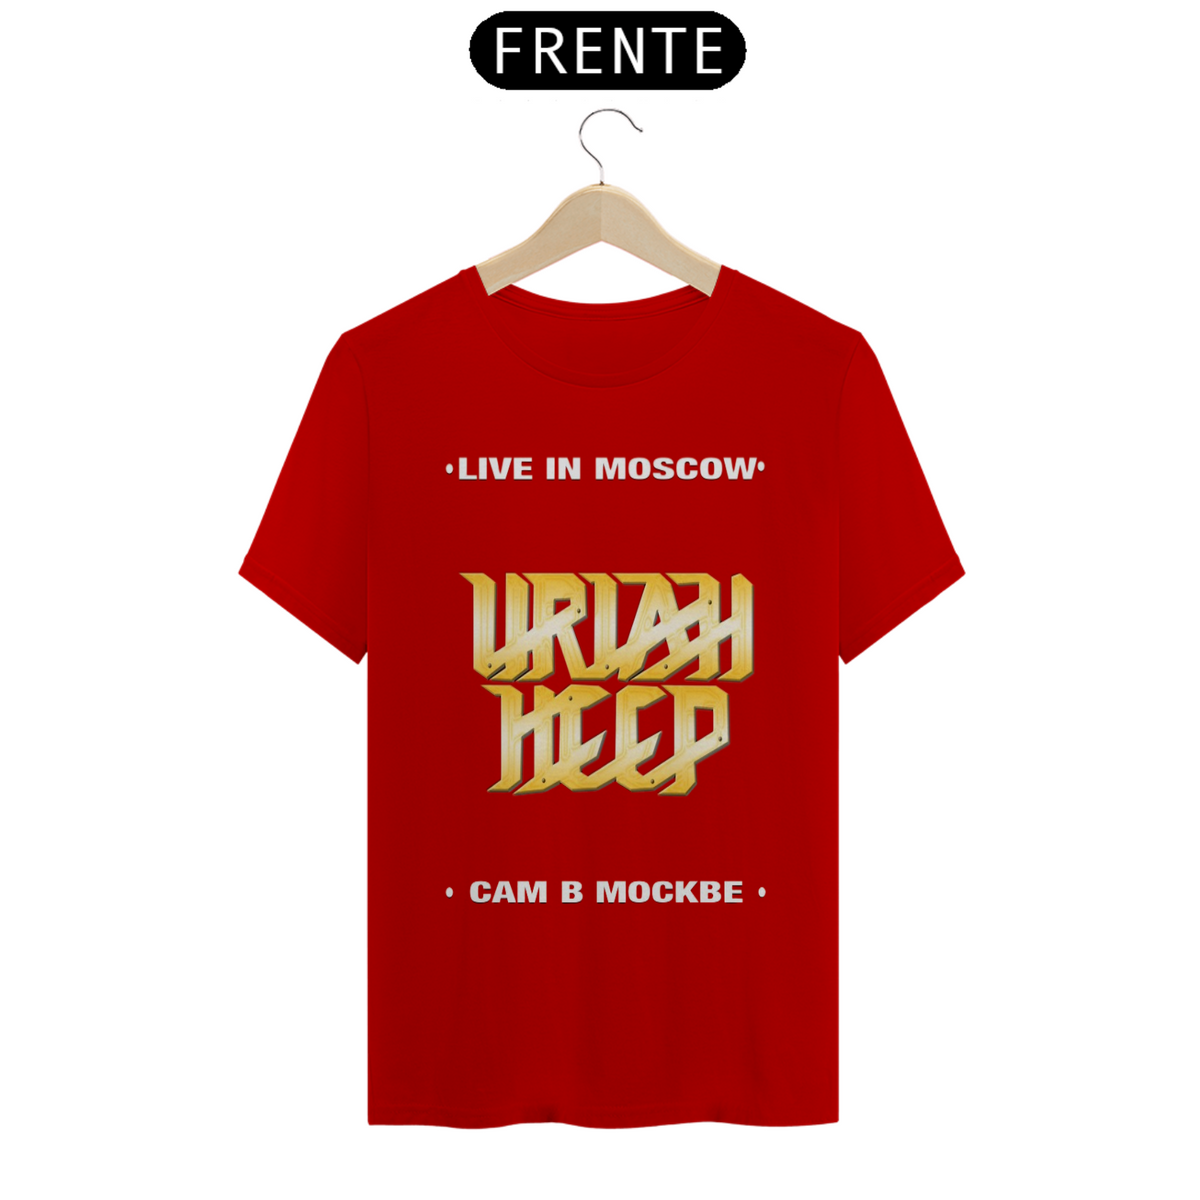 Nome do produto: Uriah Heep - Live in Moscow